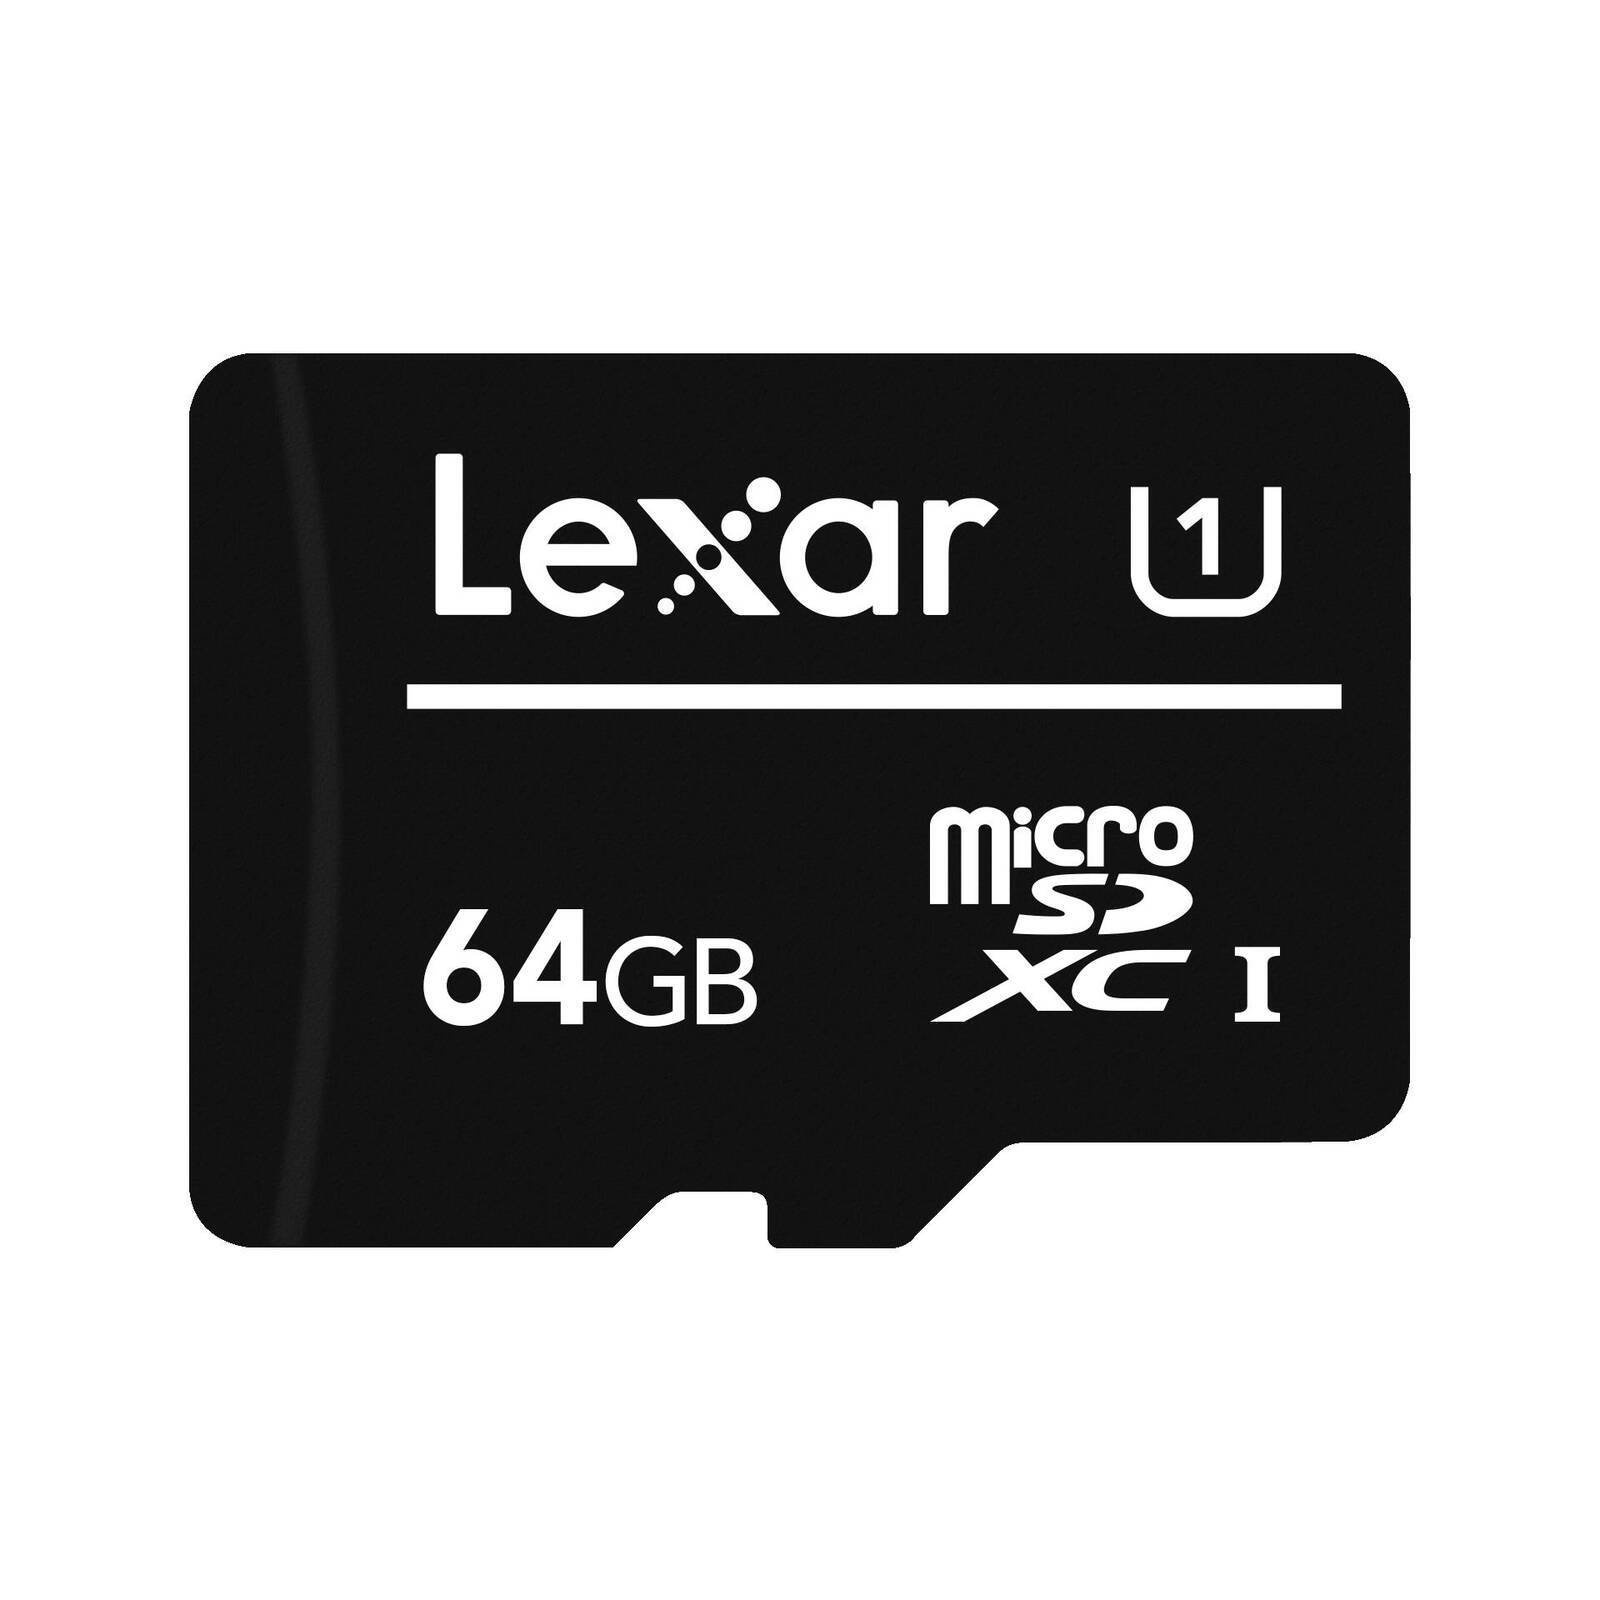 Micro SD card Lexar High Performance 64 GB SDHC/SDXC UHS-I C10 80MB/s